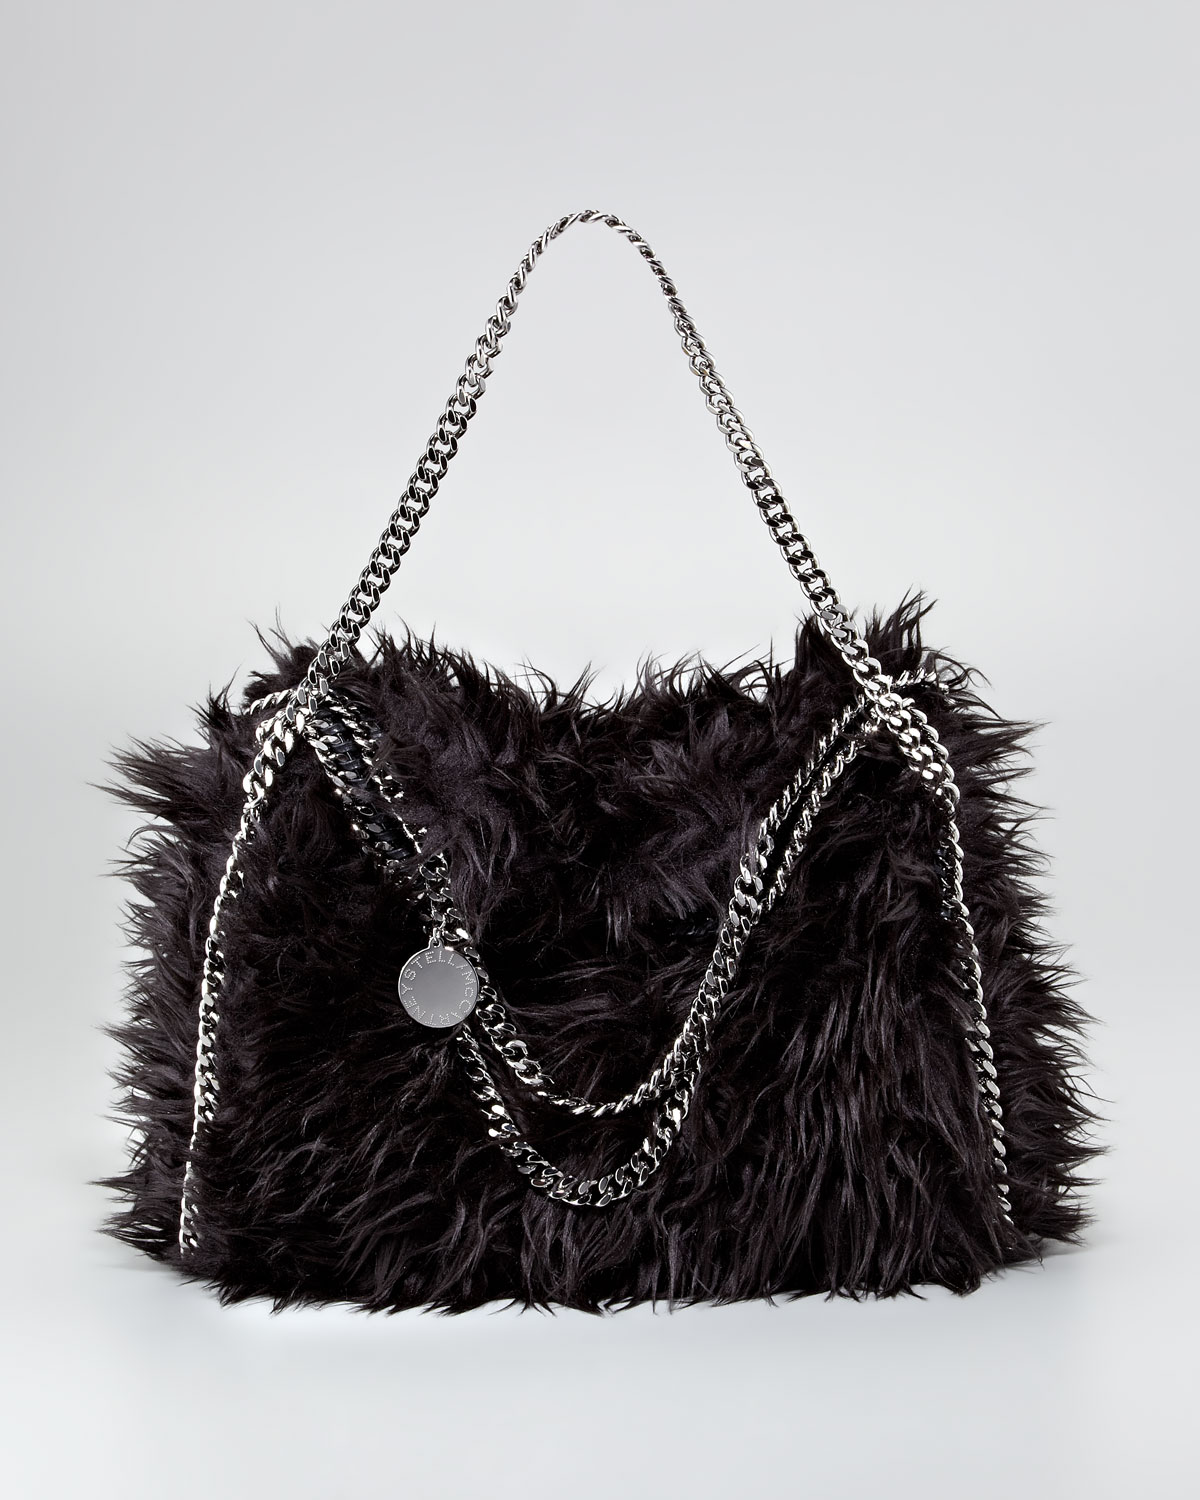 Lyst - Stella mccartney Falabella Furry Foldover Tote Bag in Black